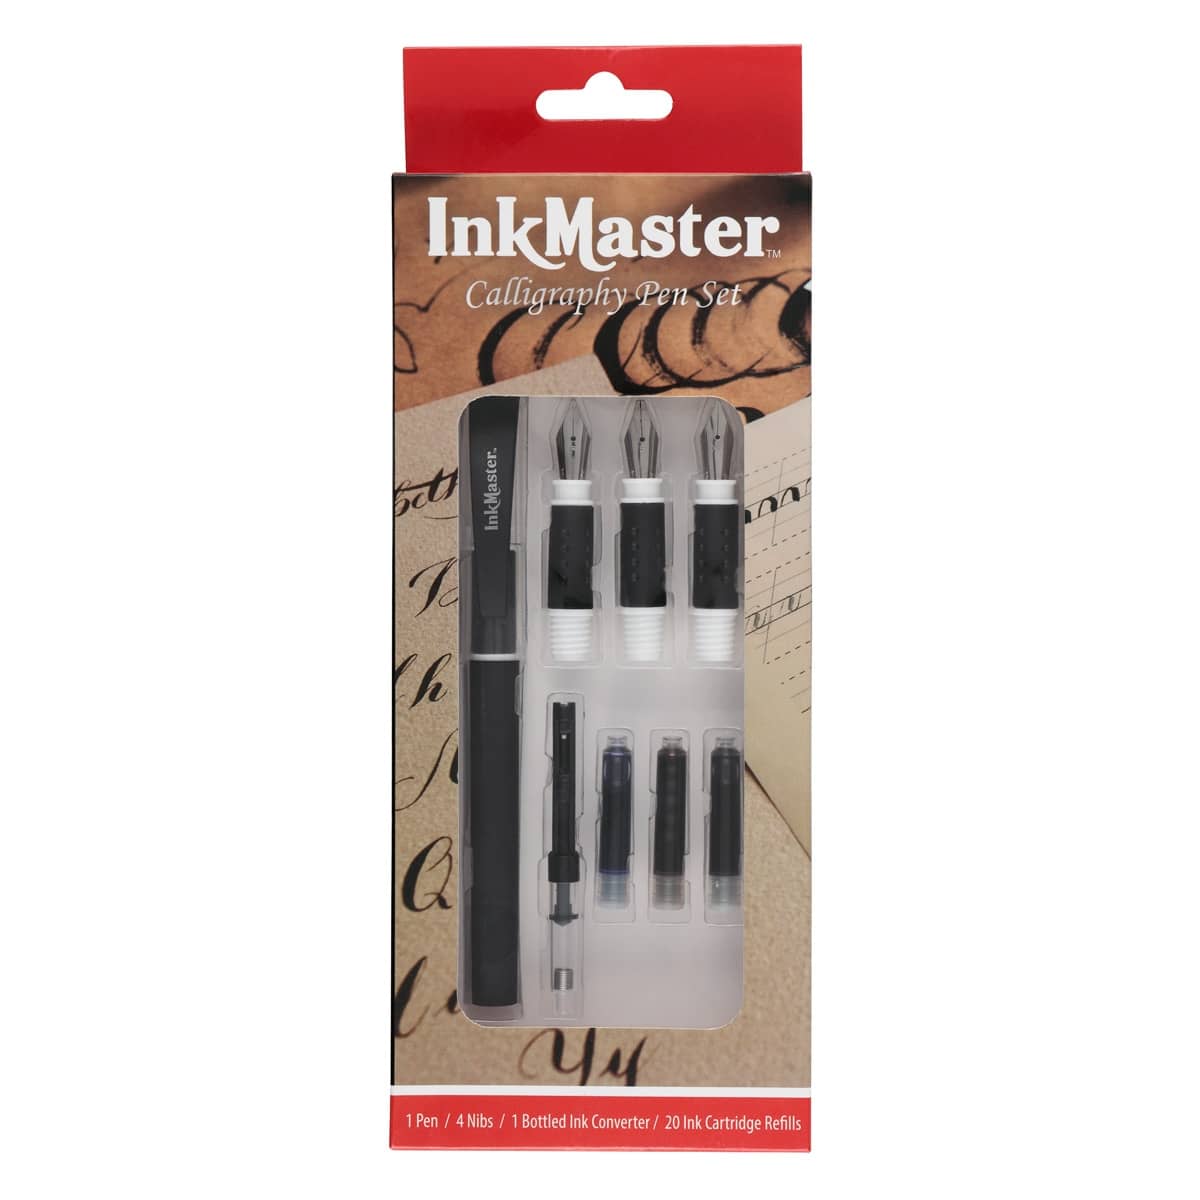 InkMaster Calligraphy Pen Set